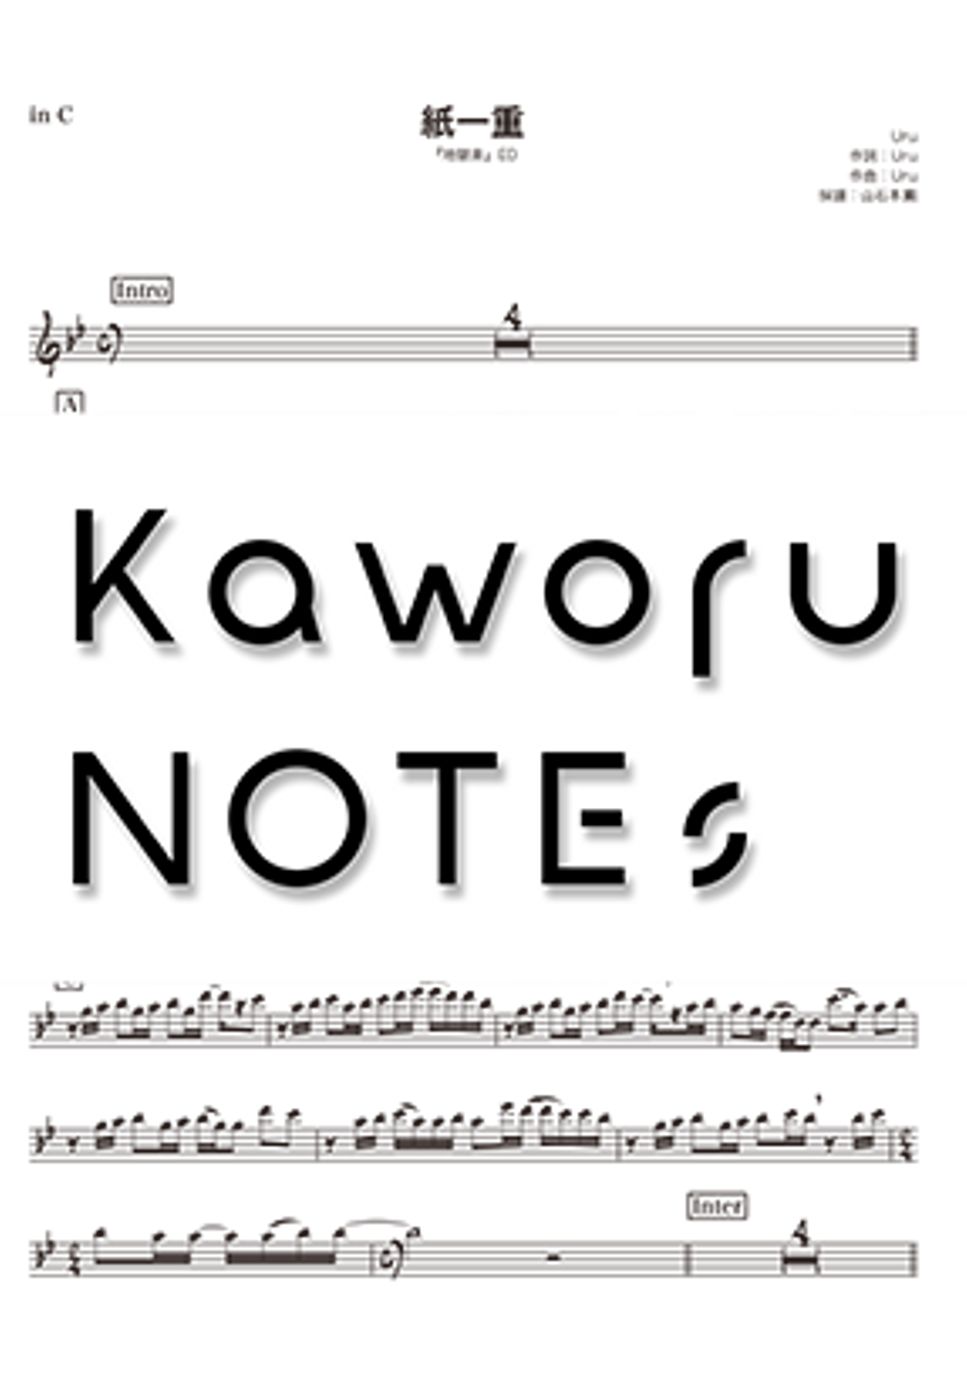 Uru - 紙一重（in B♭『地獄楽』） by Kaworu NOTEs